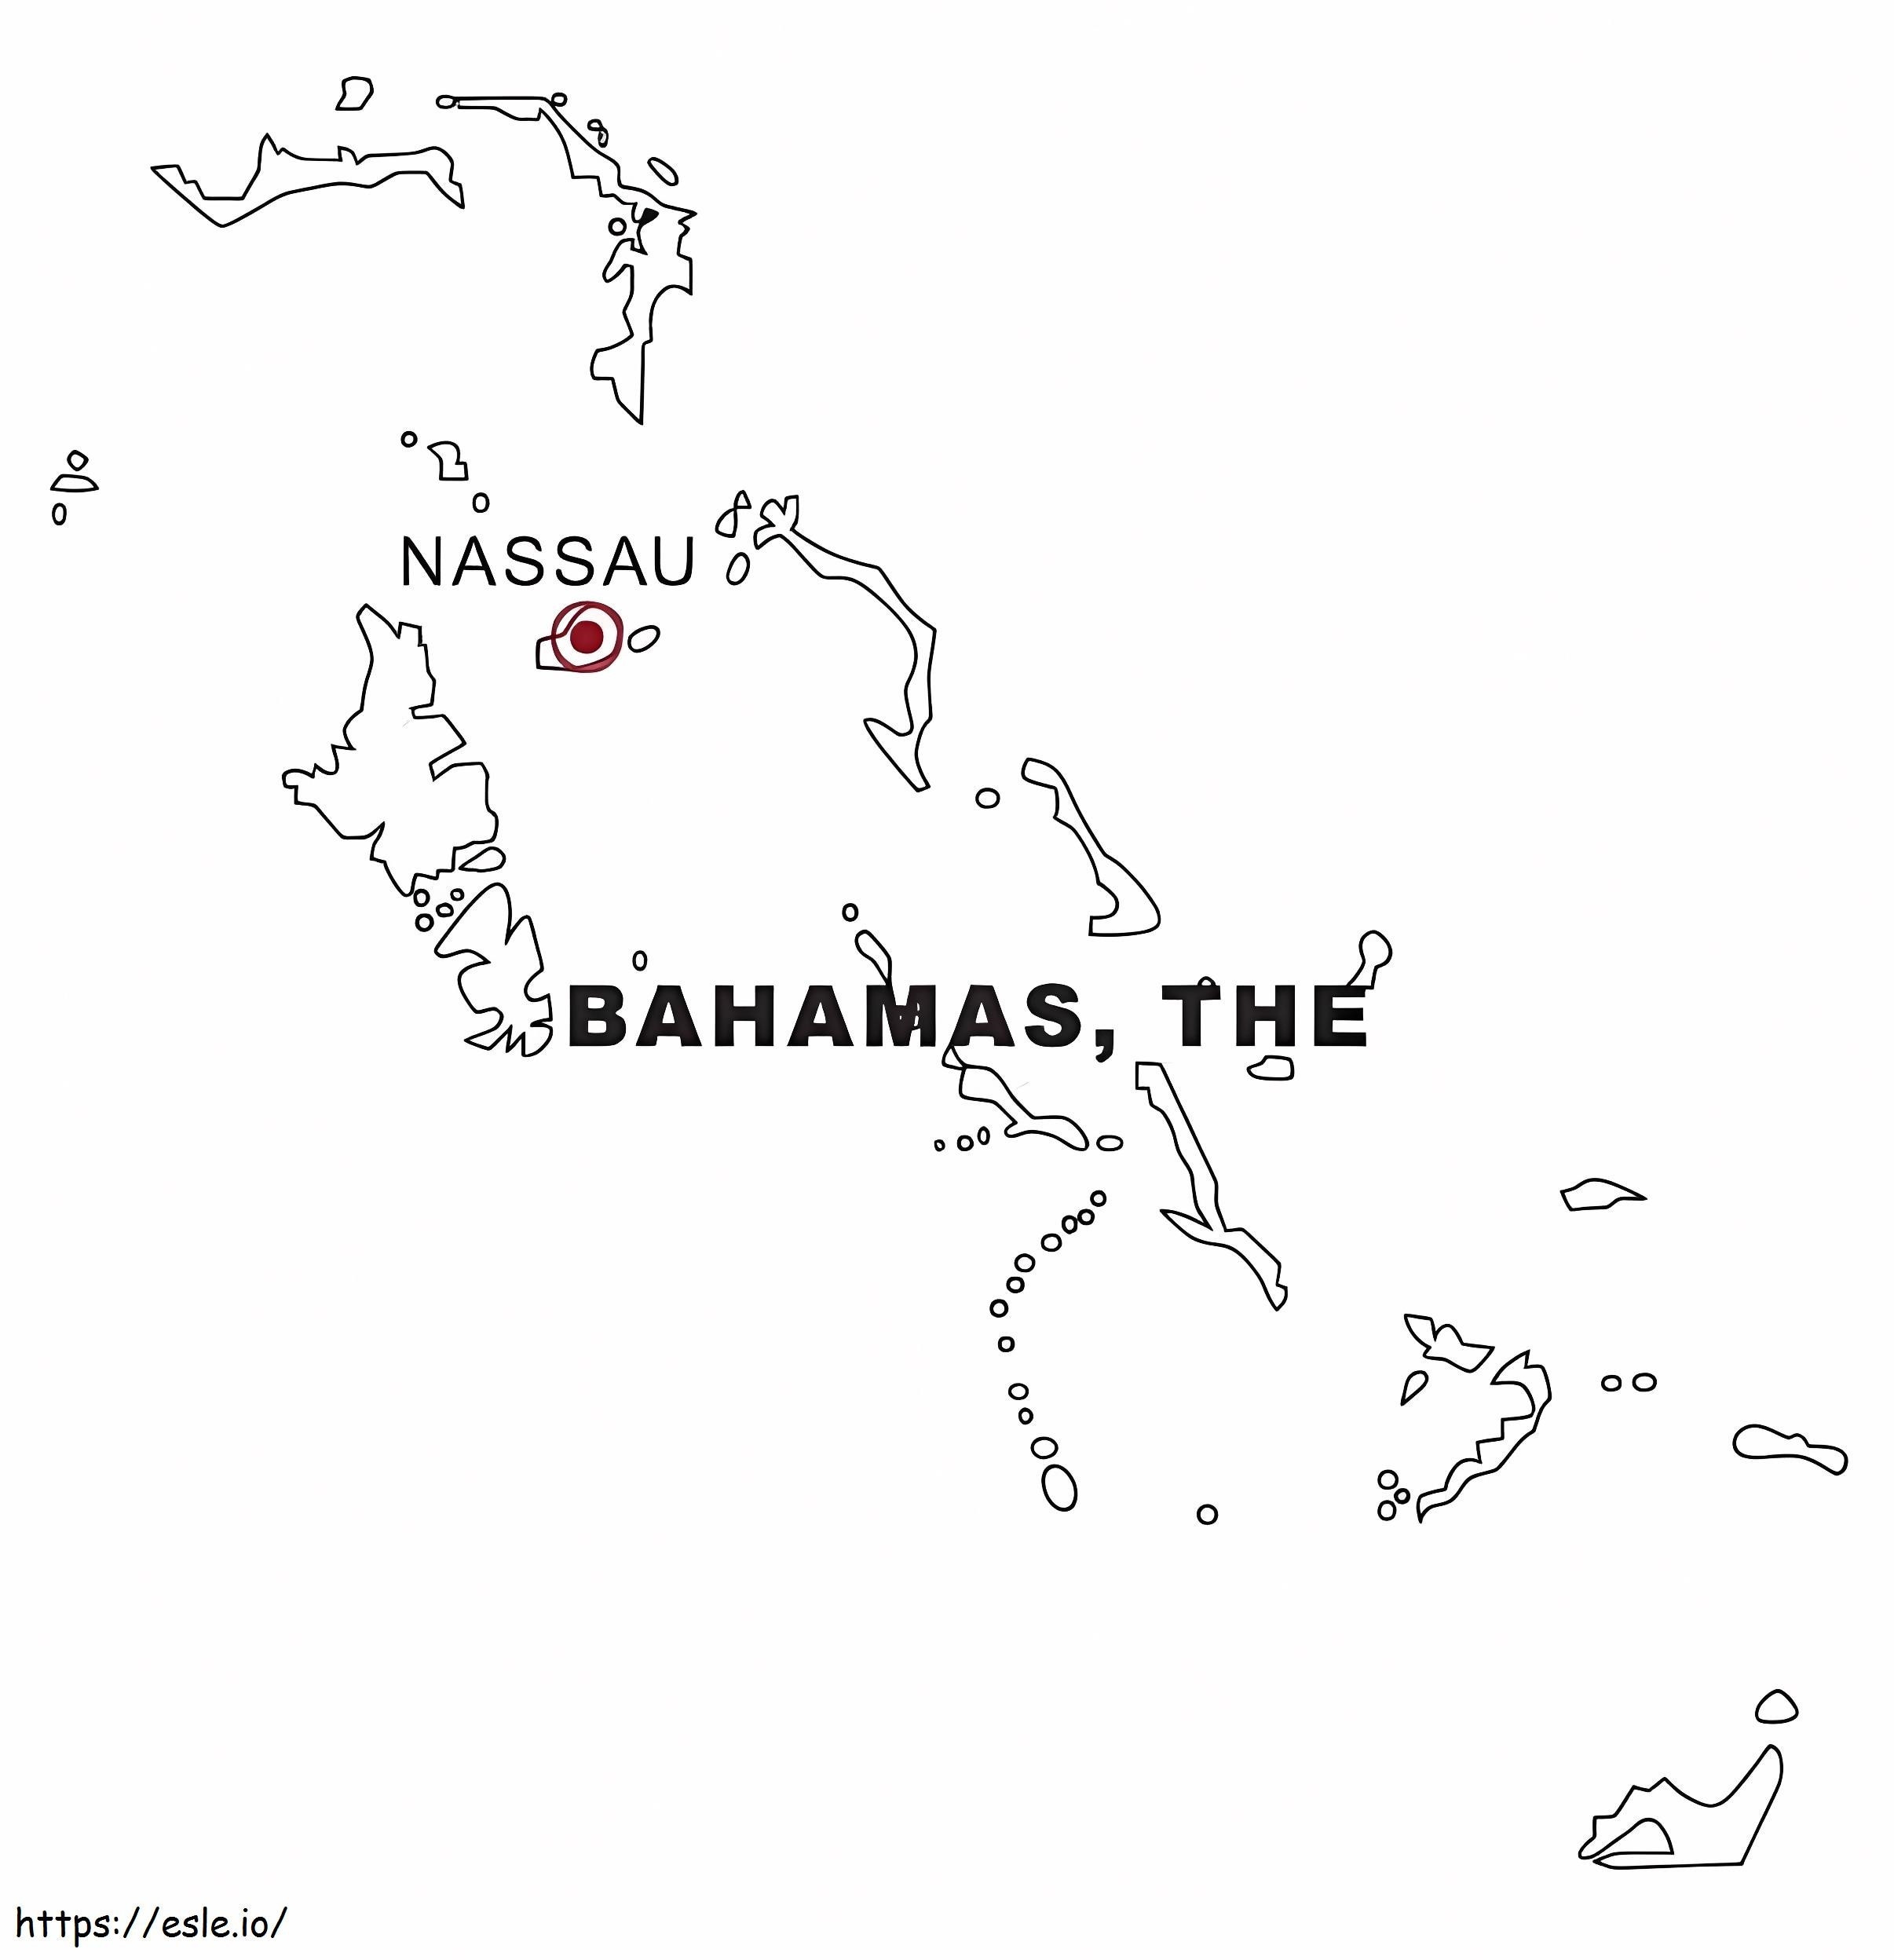 Karte der Bahamas ausmalbilder